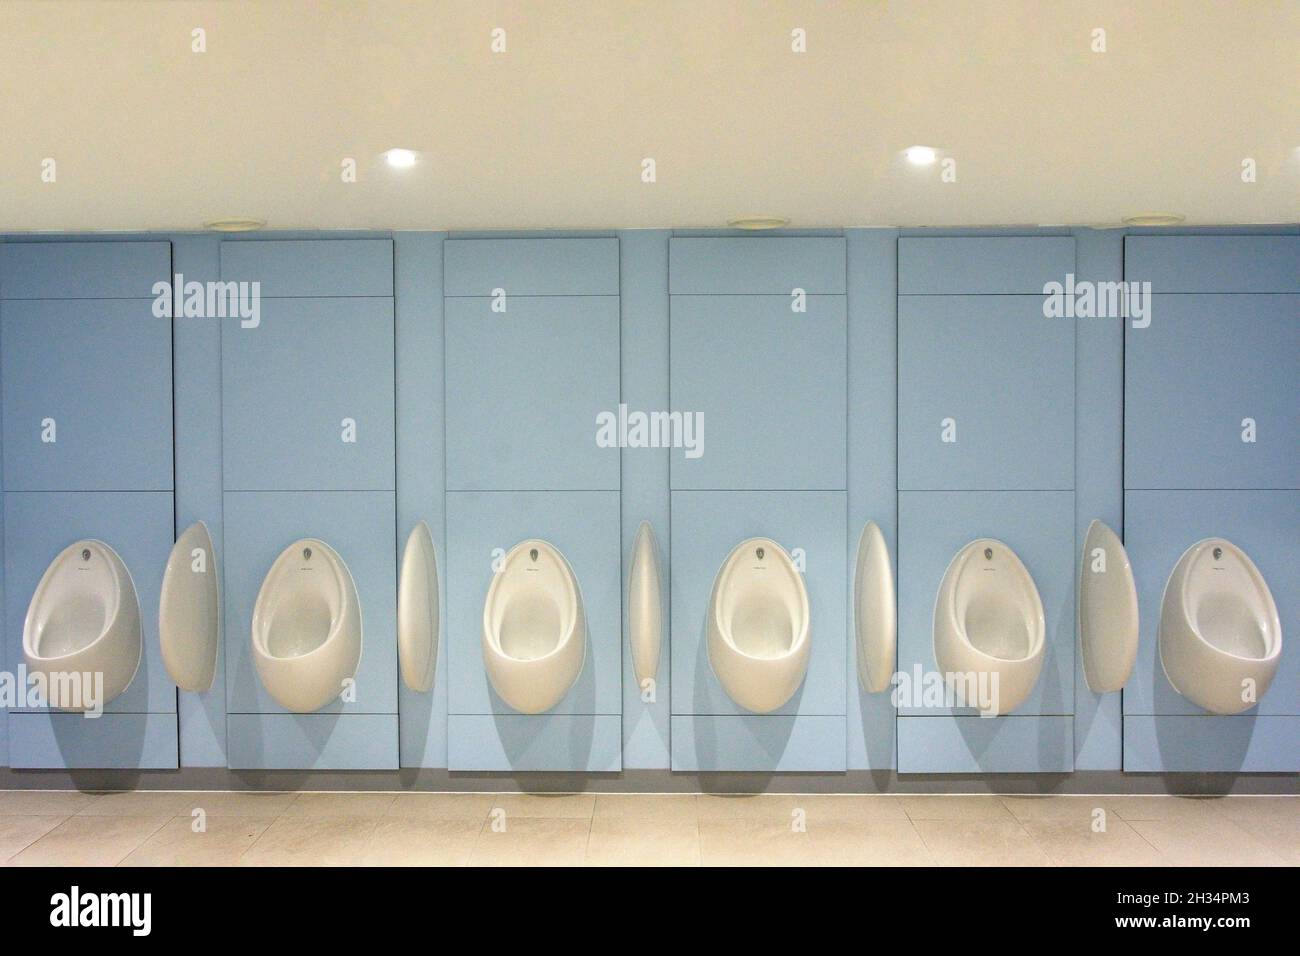 Urinoirs dans les toilettes pour hommes, The Avenue, The Lexicon Shopping Centre, Bracknell, Berkshire, Angleterre, Royaume-Uni Banque D'Images